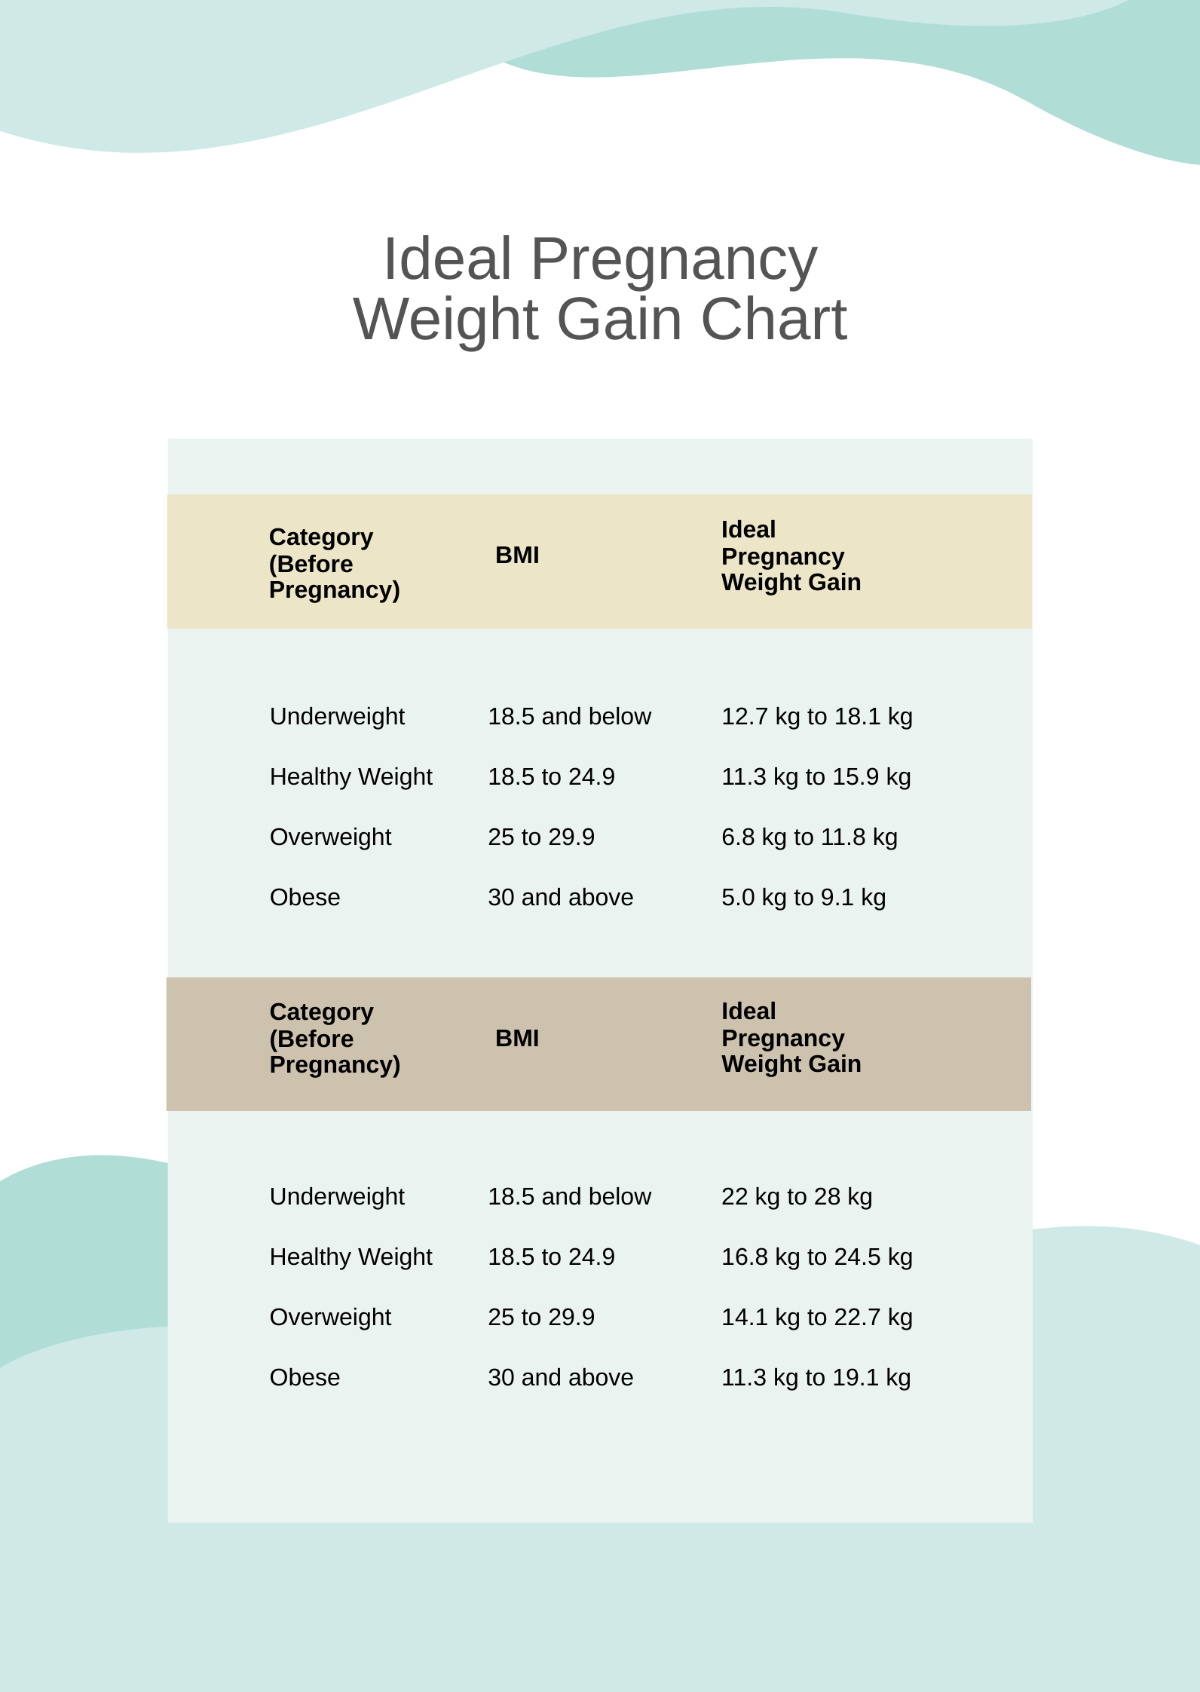 Ideal Pregnancy Weight Gain Chart Template